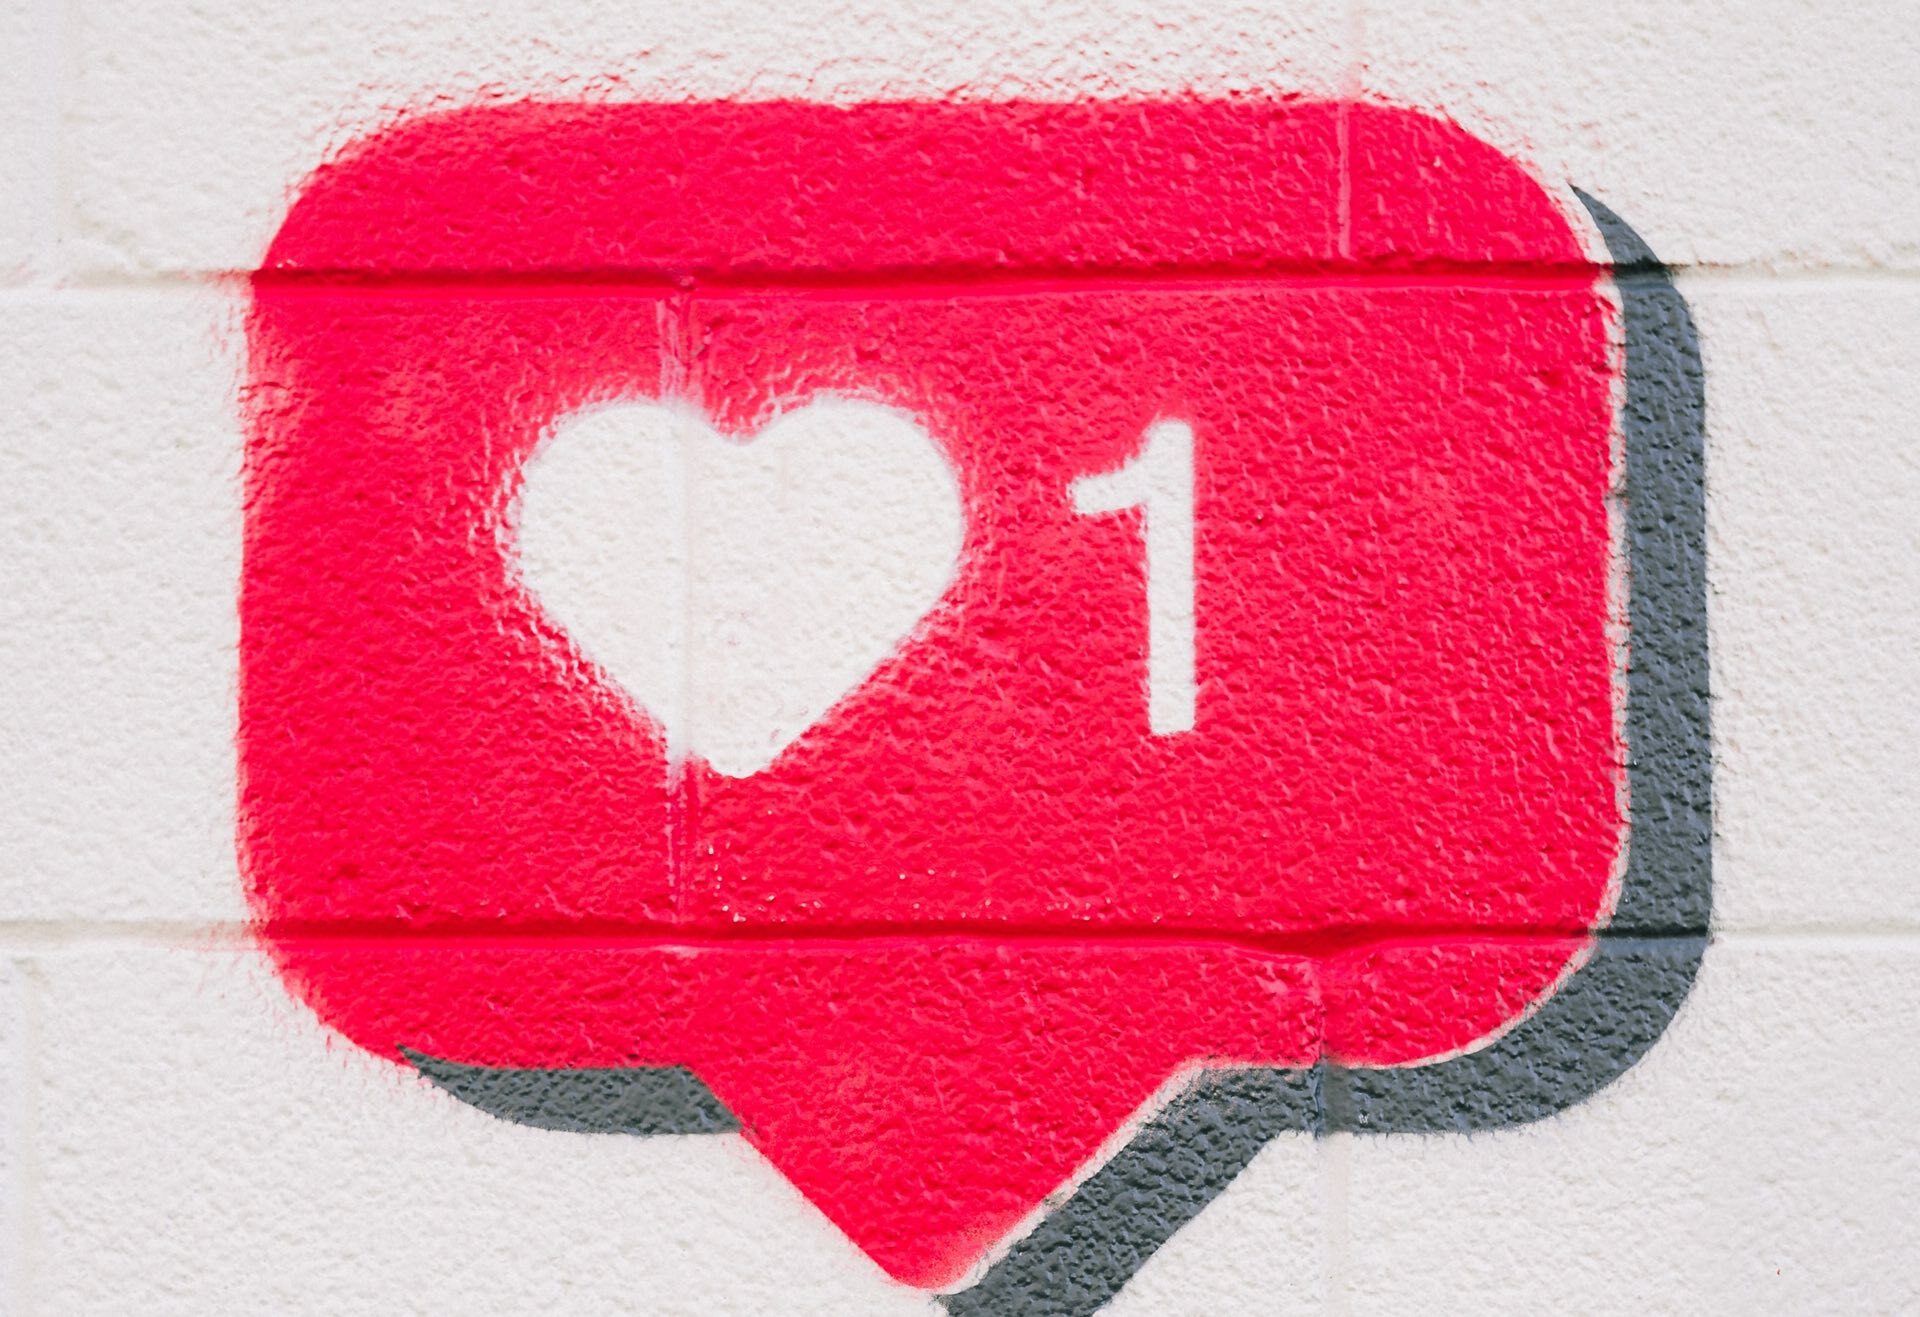 A social media like painted on a wall like graffiti